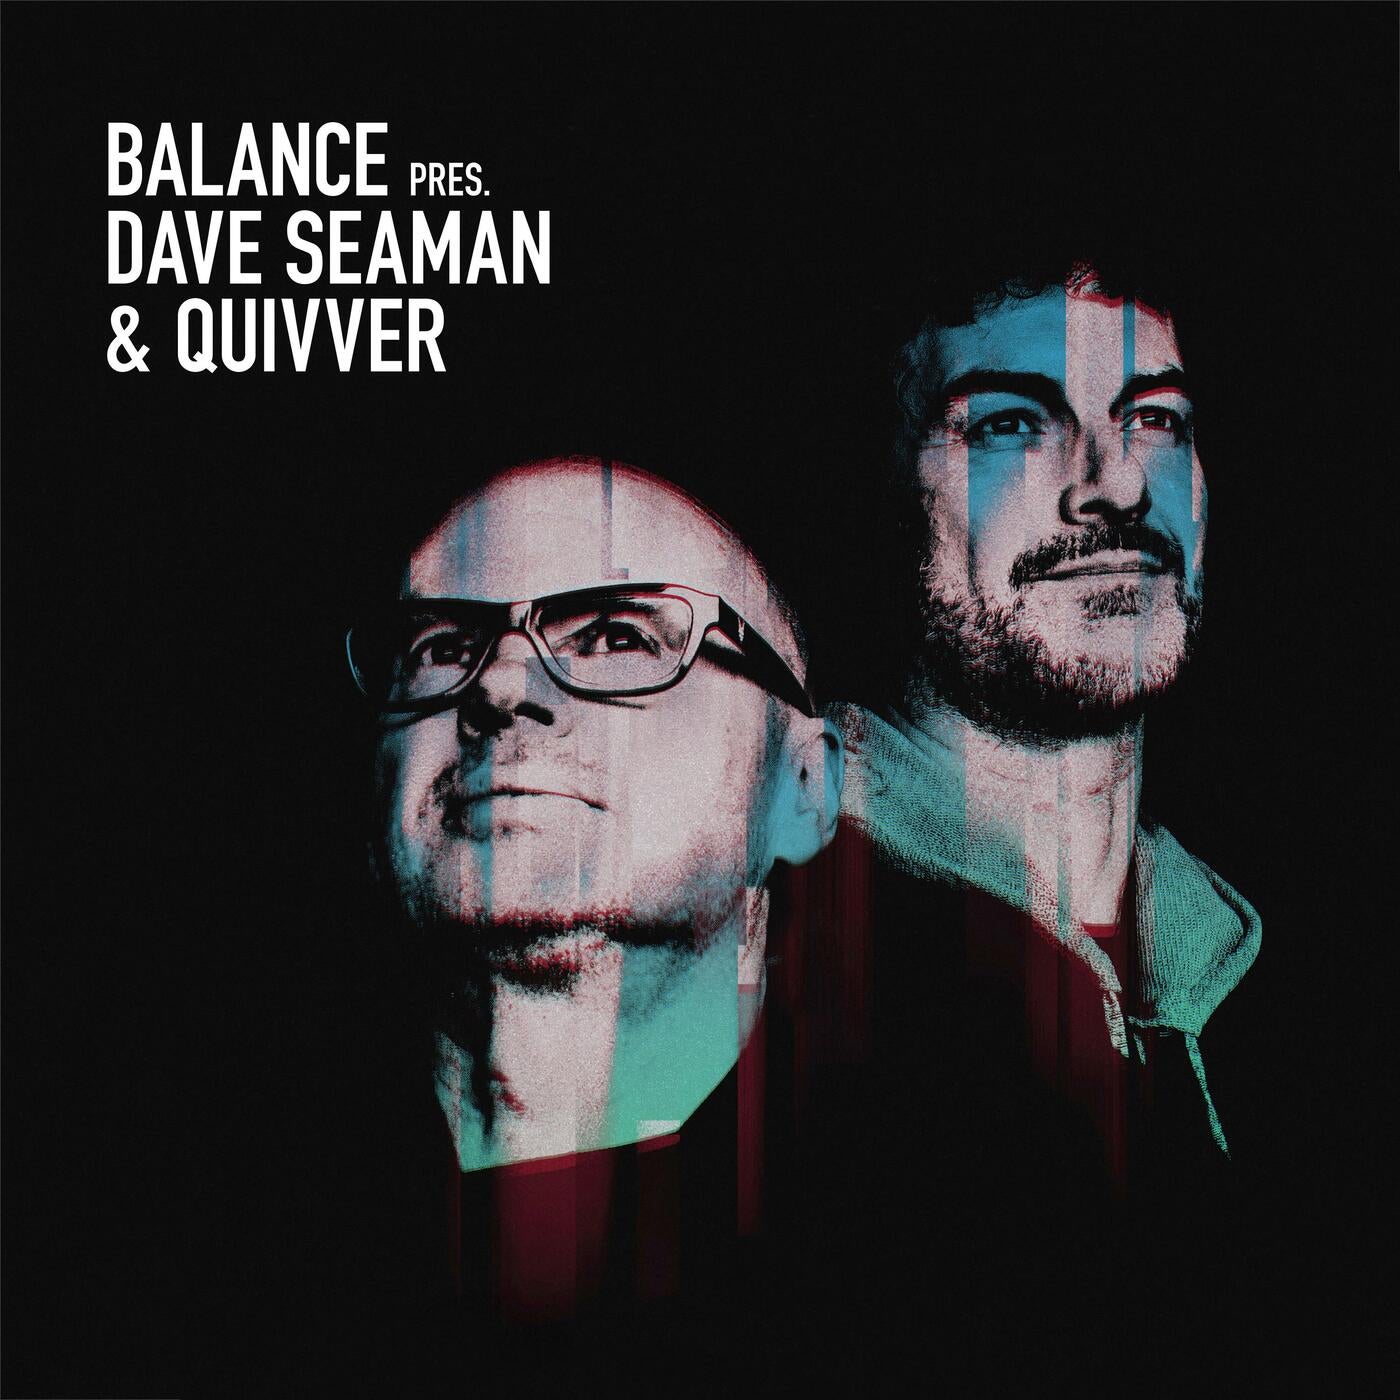 image cover: VA - Balance presents Dave Seaman & Quivver on Balance Music